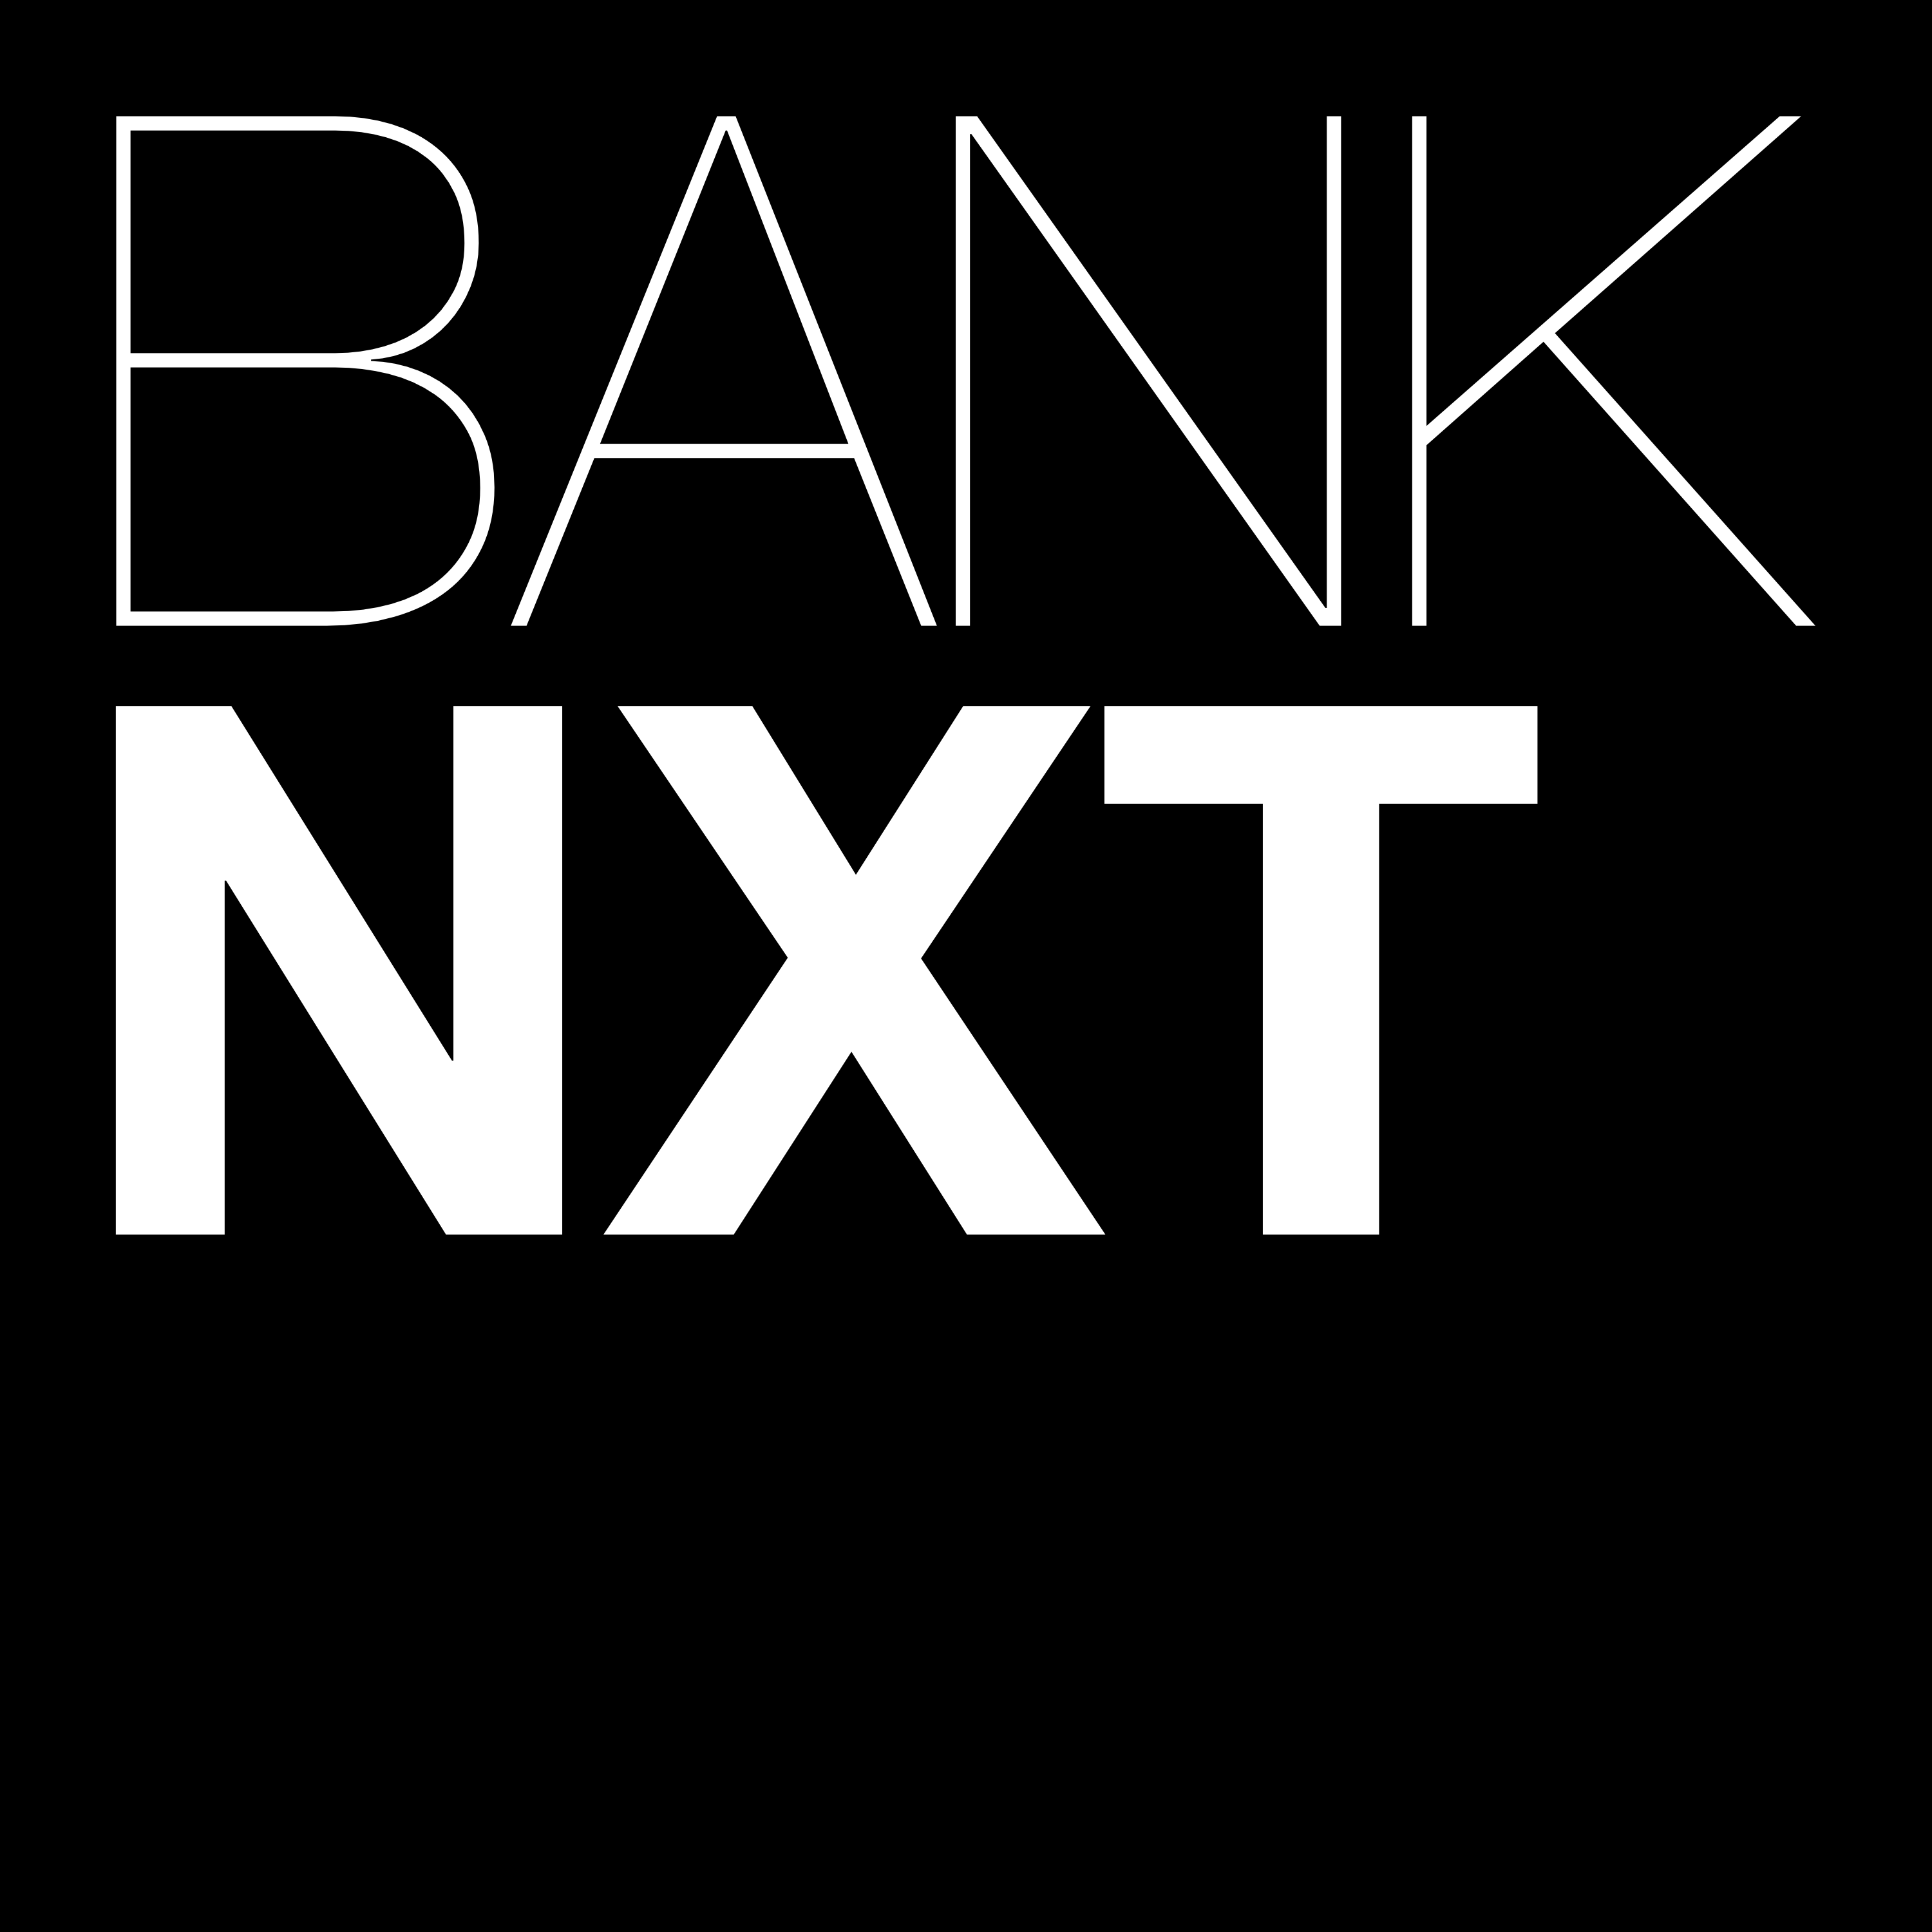 Black Square Logo - BankNXT square PNG logo on black - BankNXT